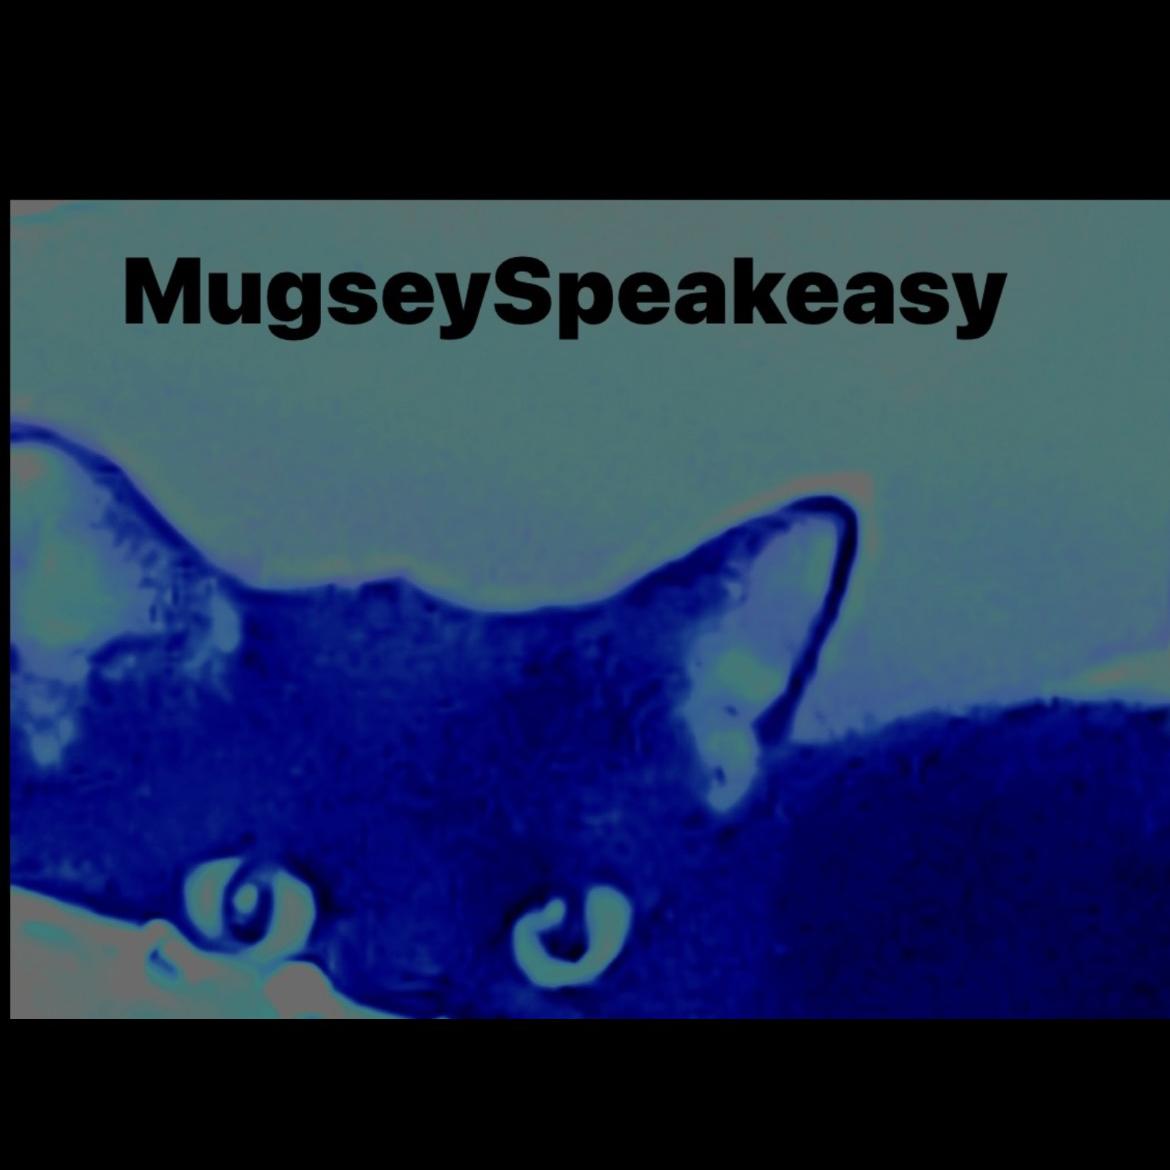 MugseySpeakeasy's images